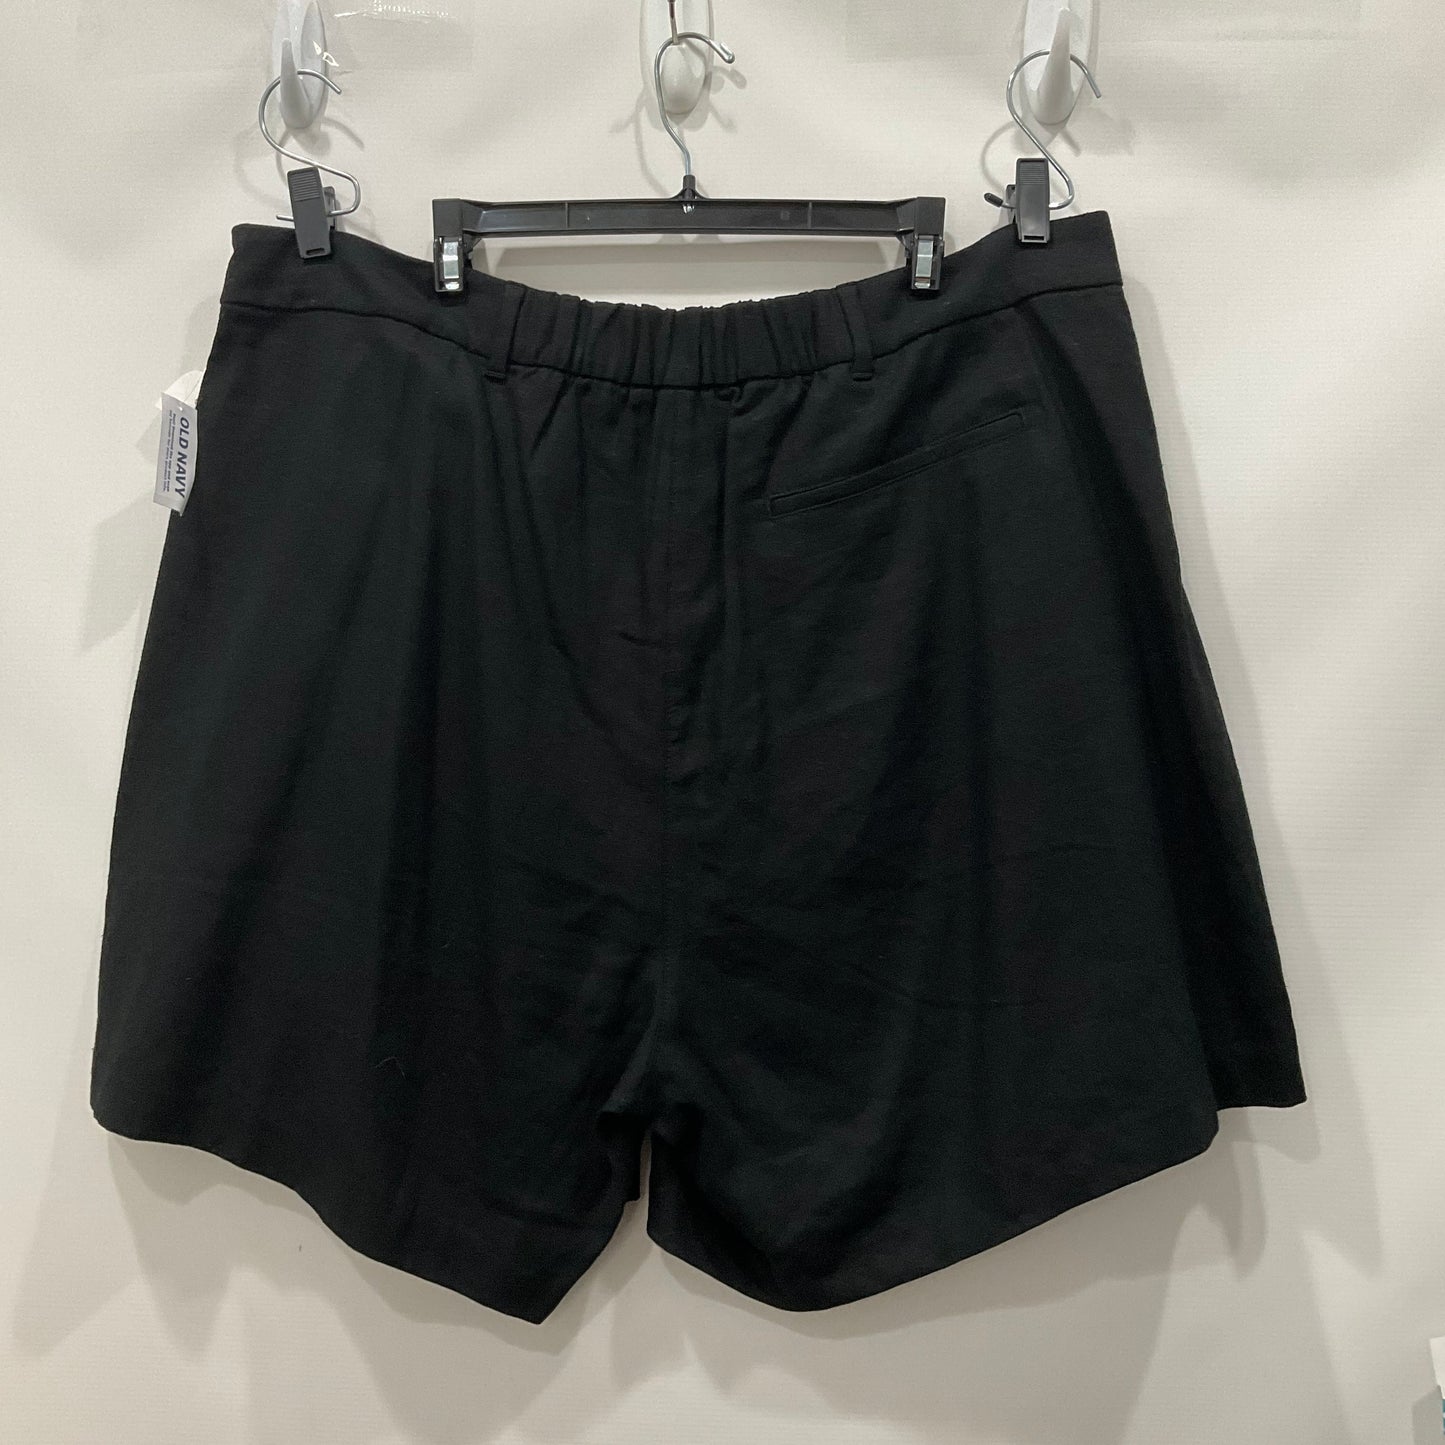 Black Shorts Old Navy, Size 2x